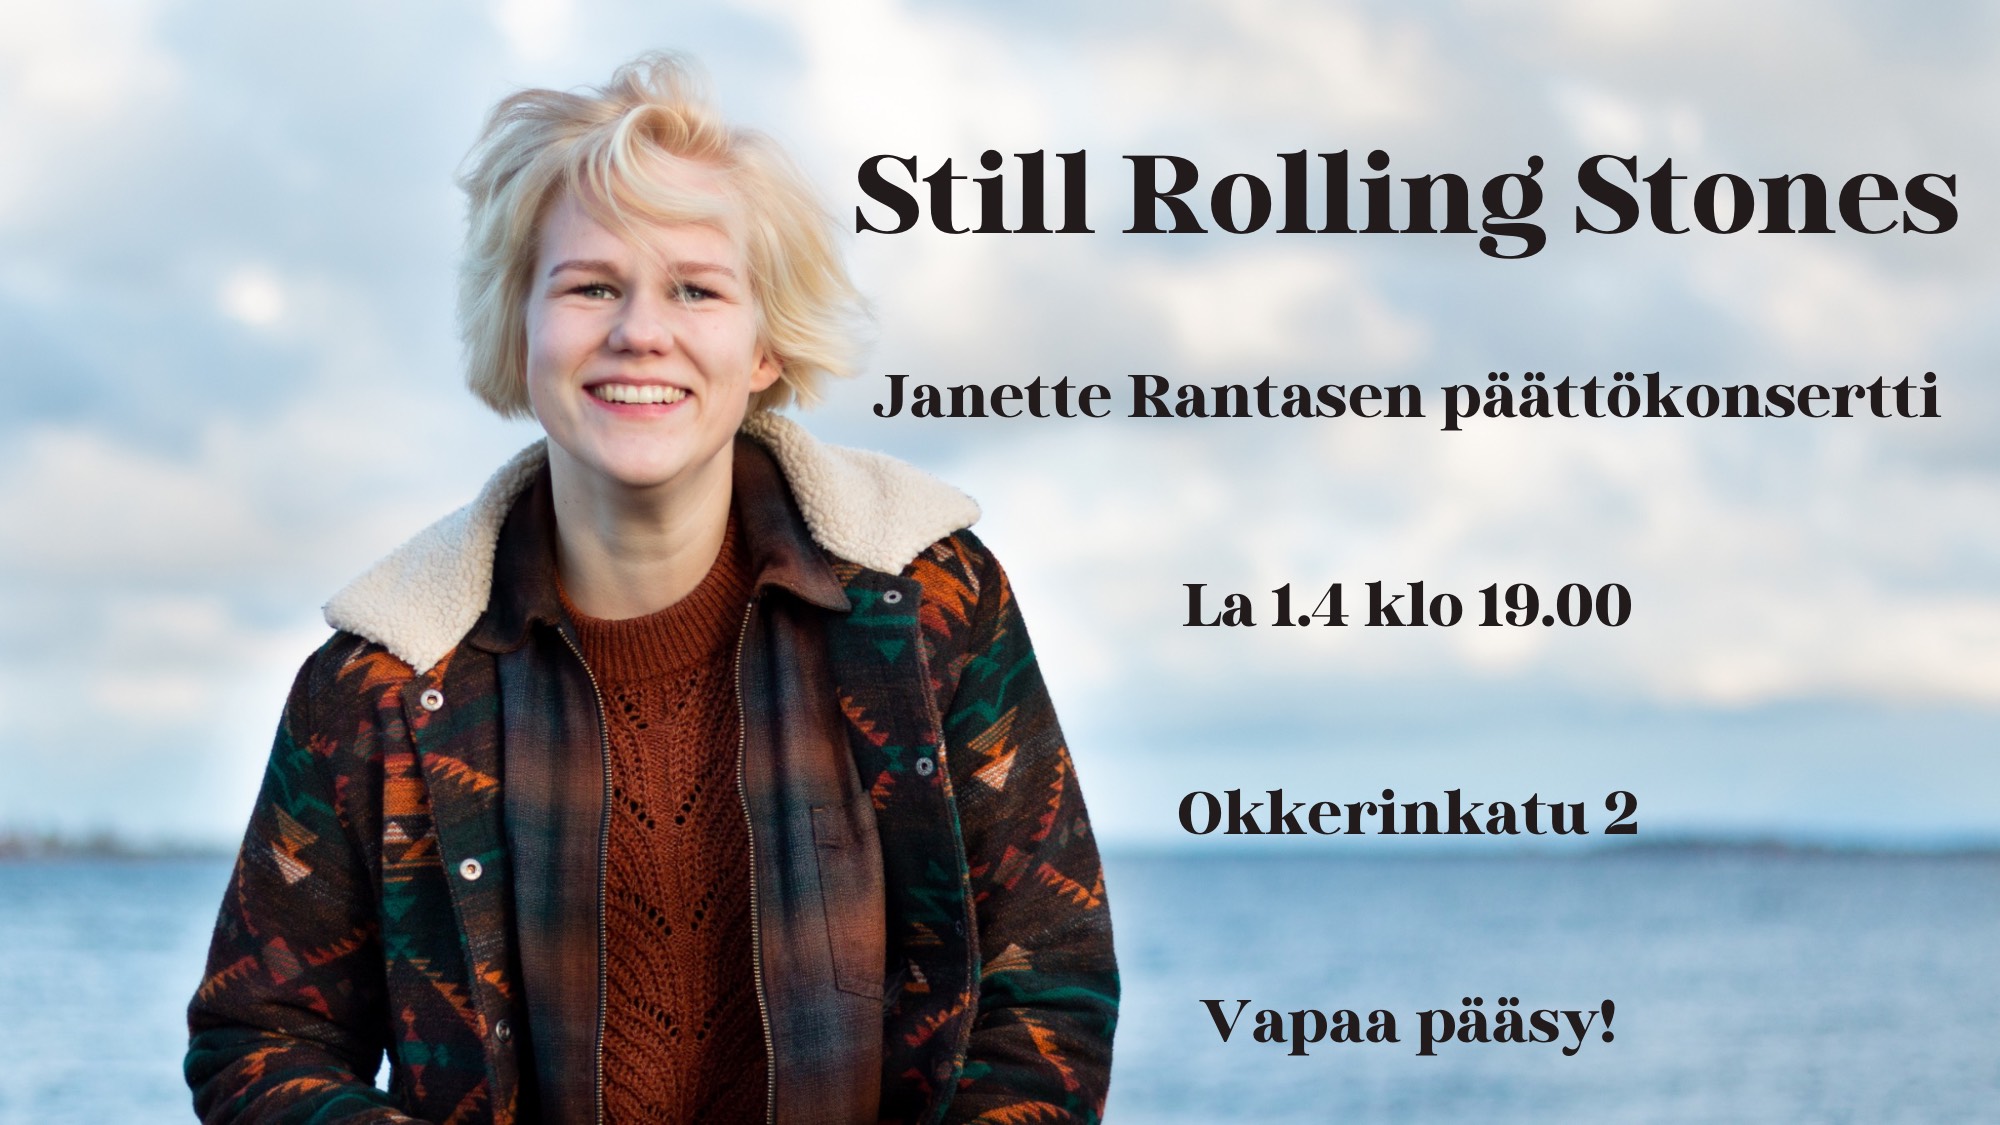 Still Rolling Stones - Janette Rantasen päättökonsertti